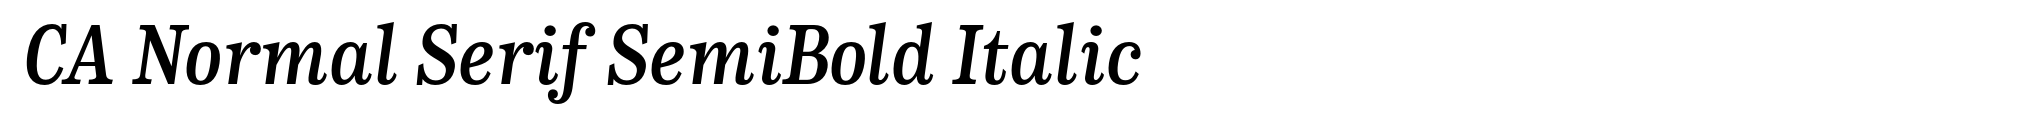 CA Normal Serif SemiBold Italic image